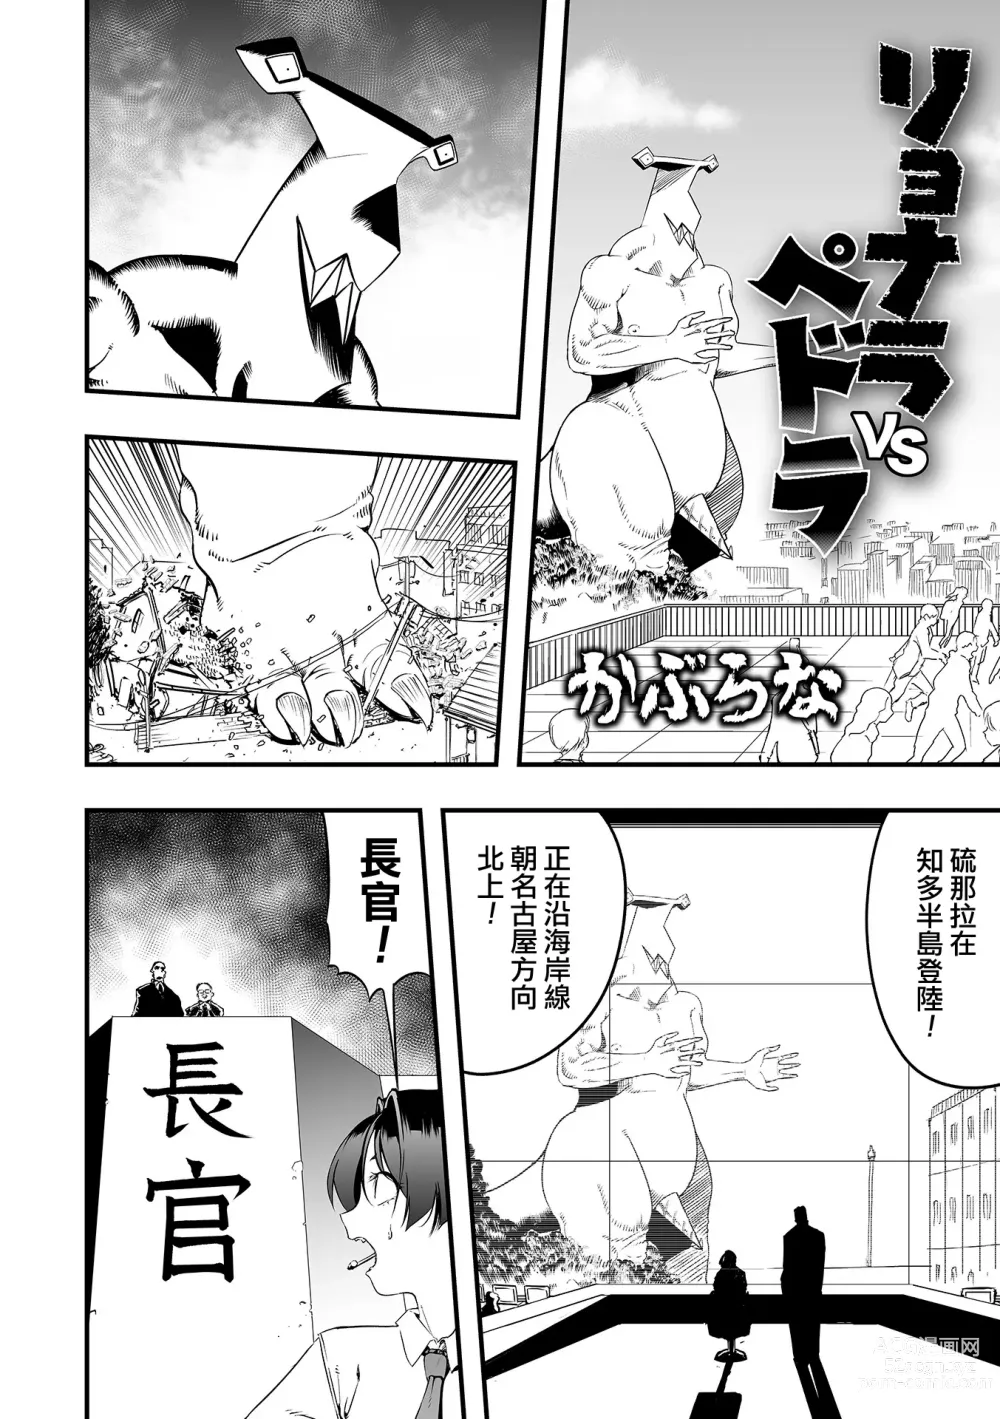 Page 3 of manga 硫那拉 vs 佩多拉